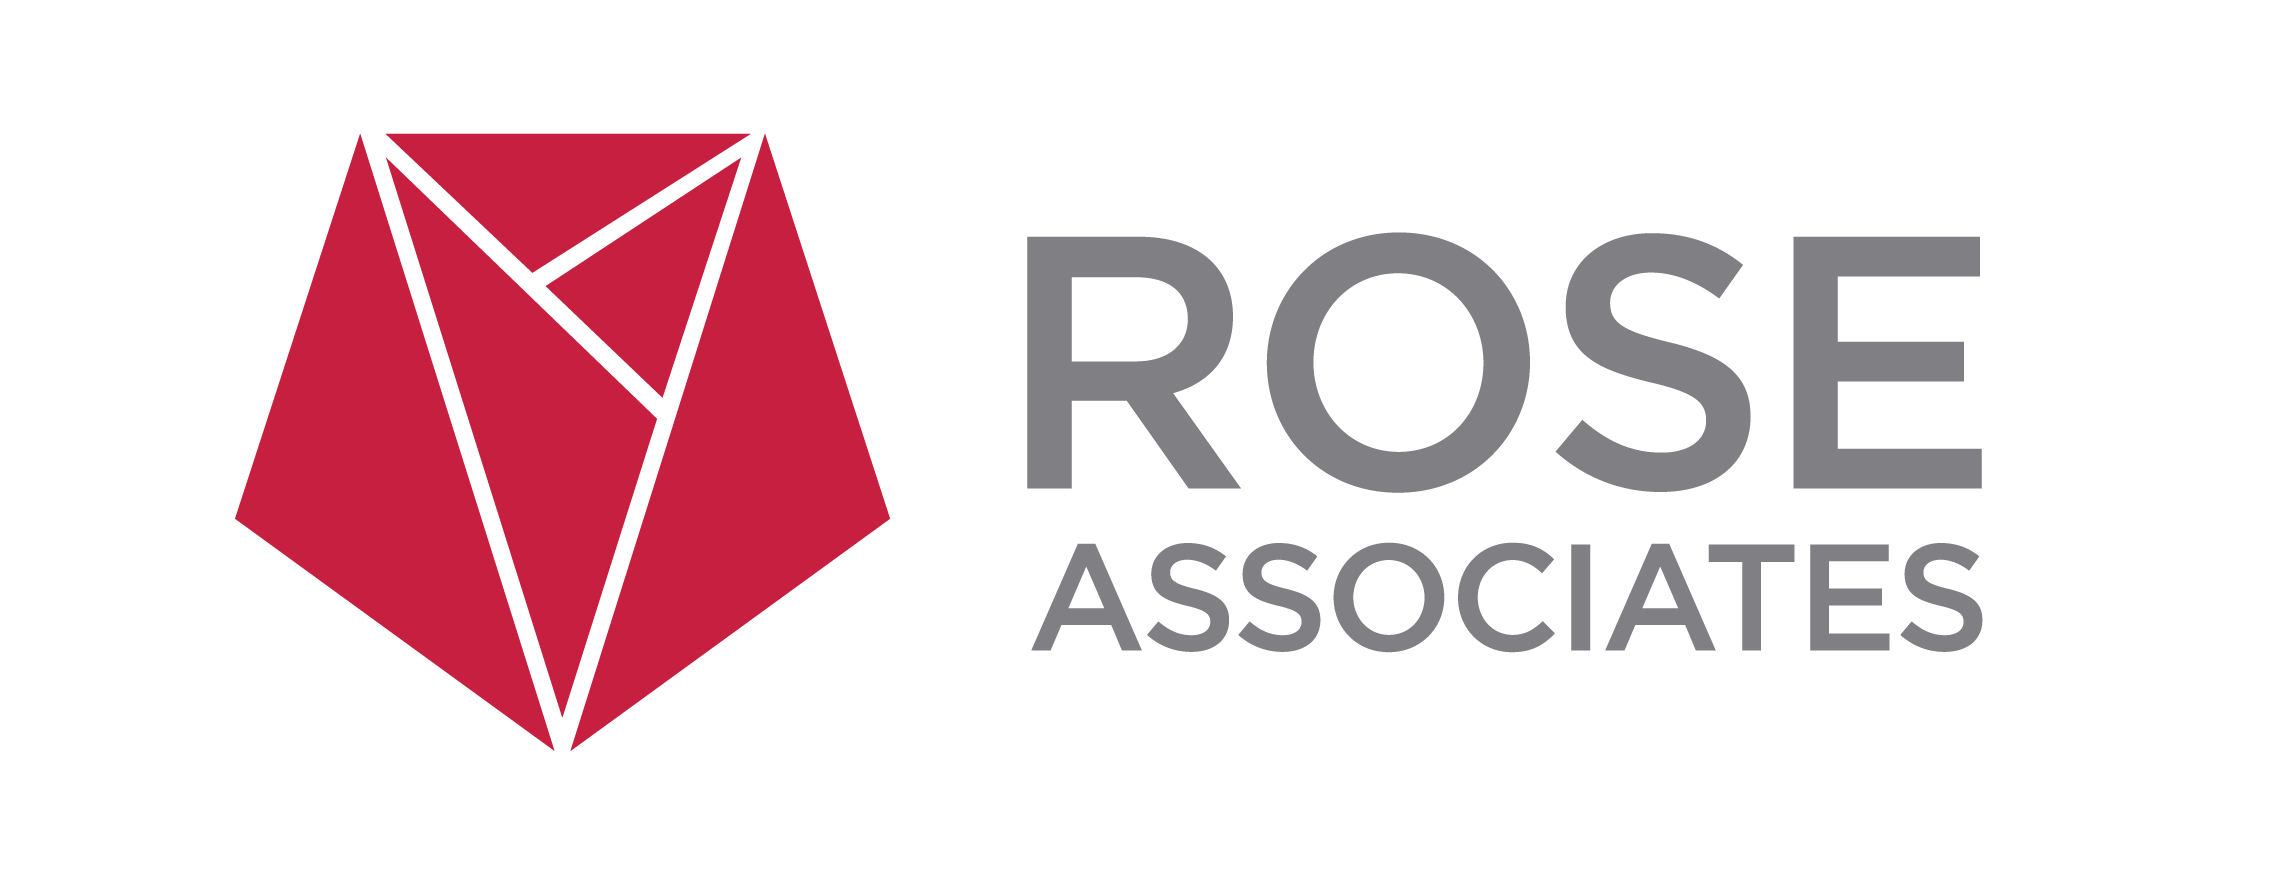 Rose Associates Logo_Horizontal-300dpi Hi Res.png